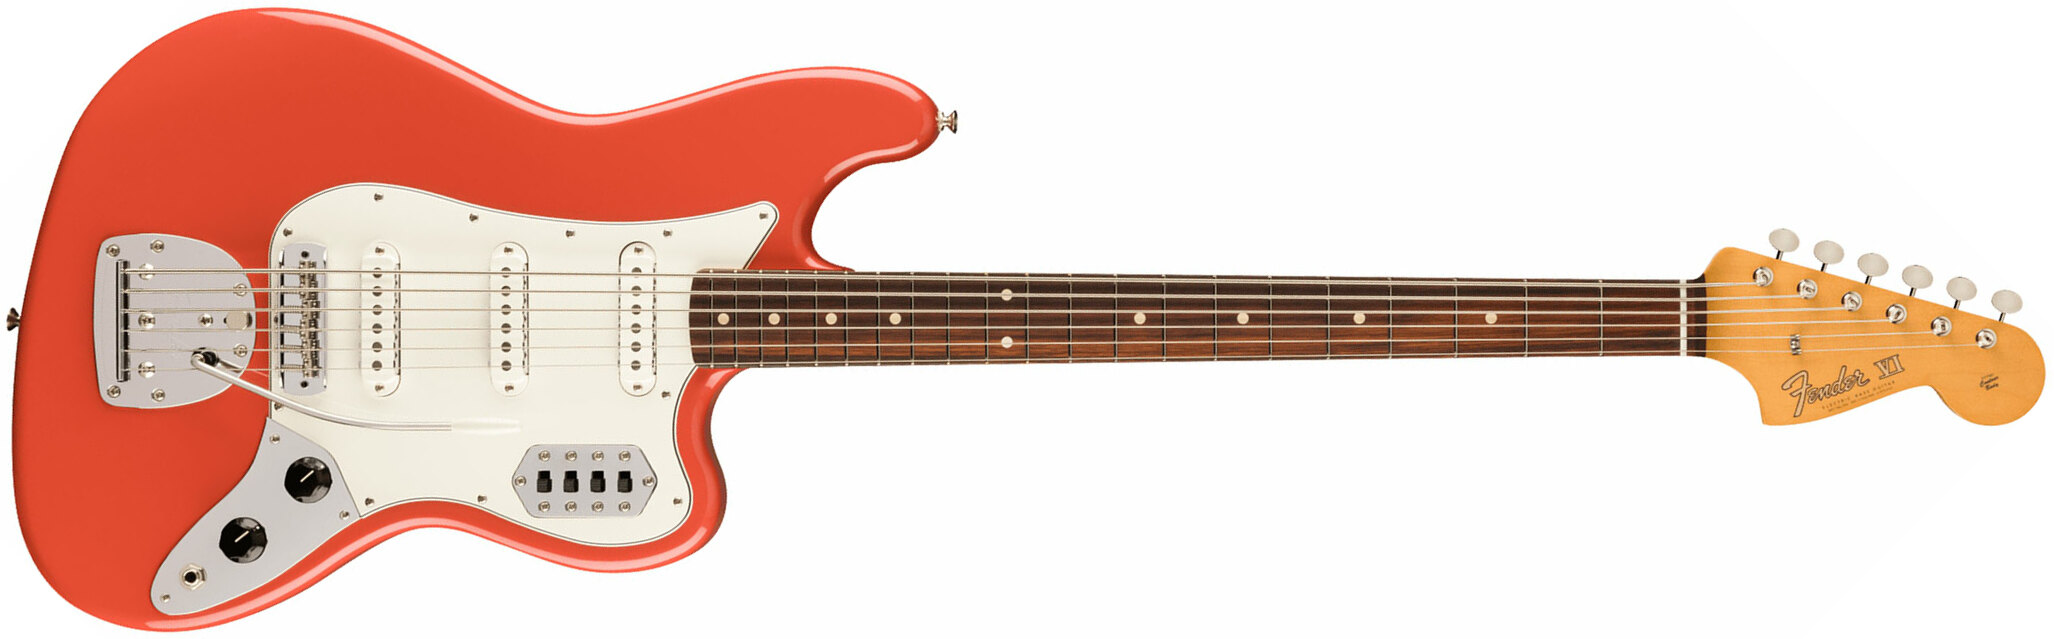 Fender 60s Bass Vi Vintera 2 3s Trem Rw - Fiesta Red - Guitarra eléctrica barítono - Main picture